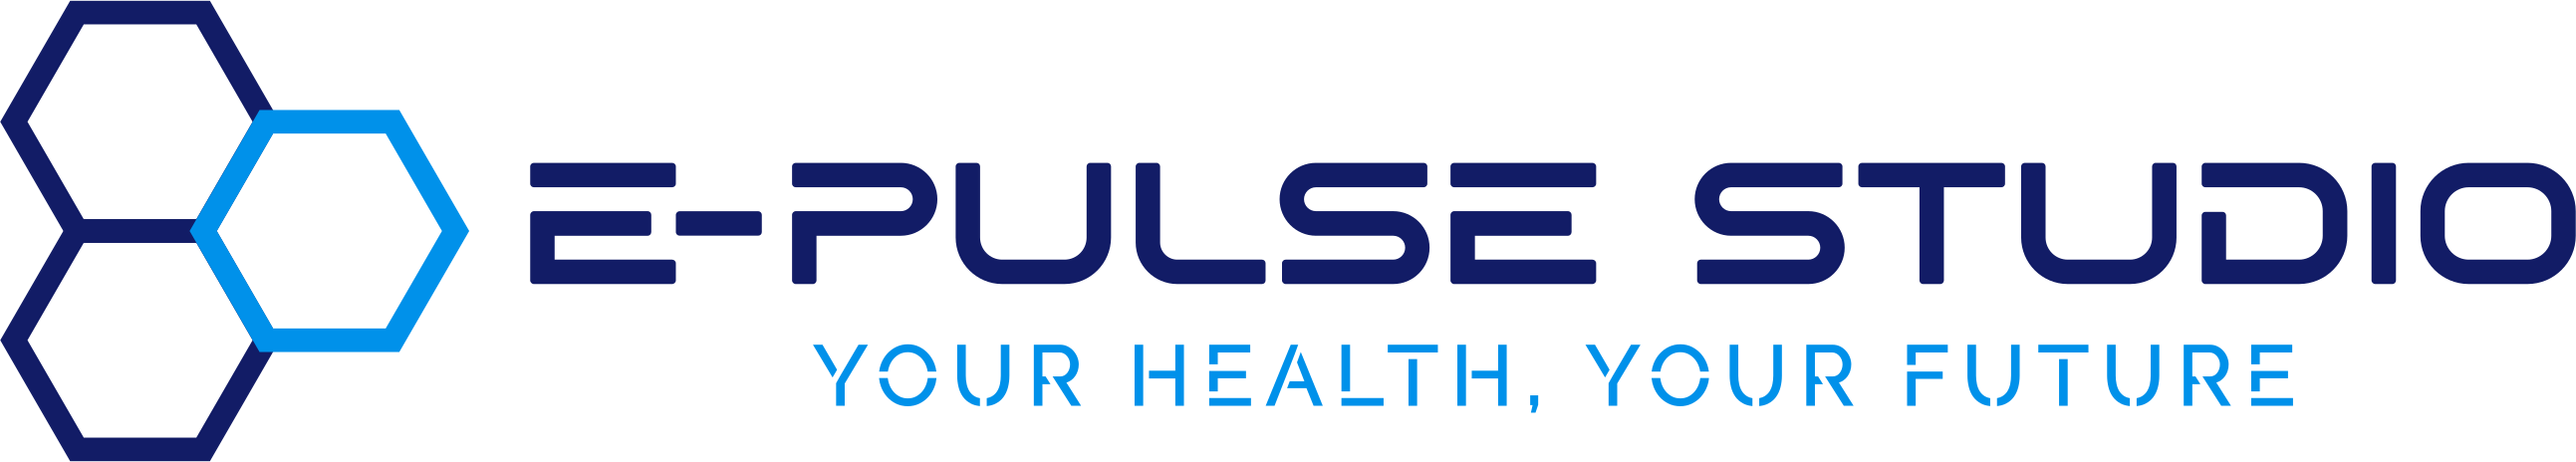 E-Pulse Studio Peterborough | EMS Fitness & Health Studio in Peterborough